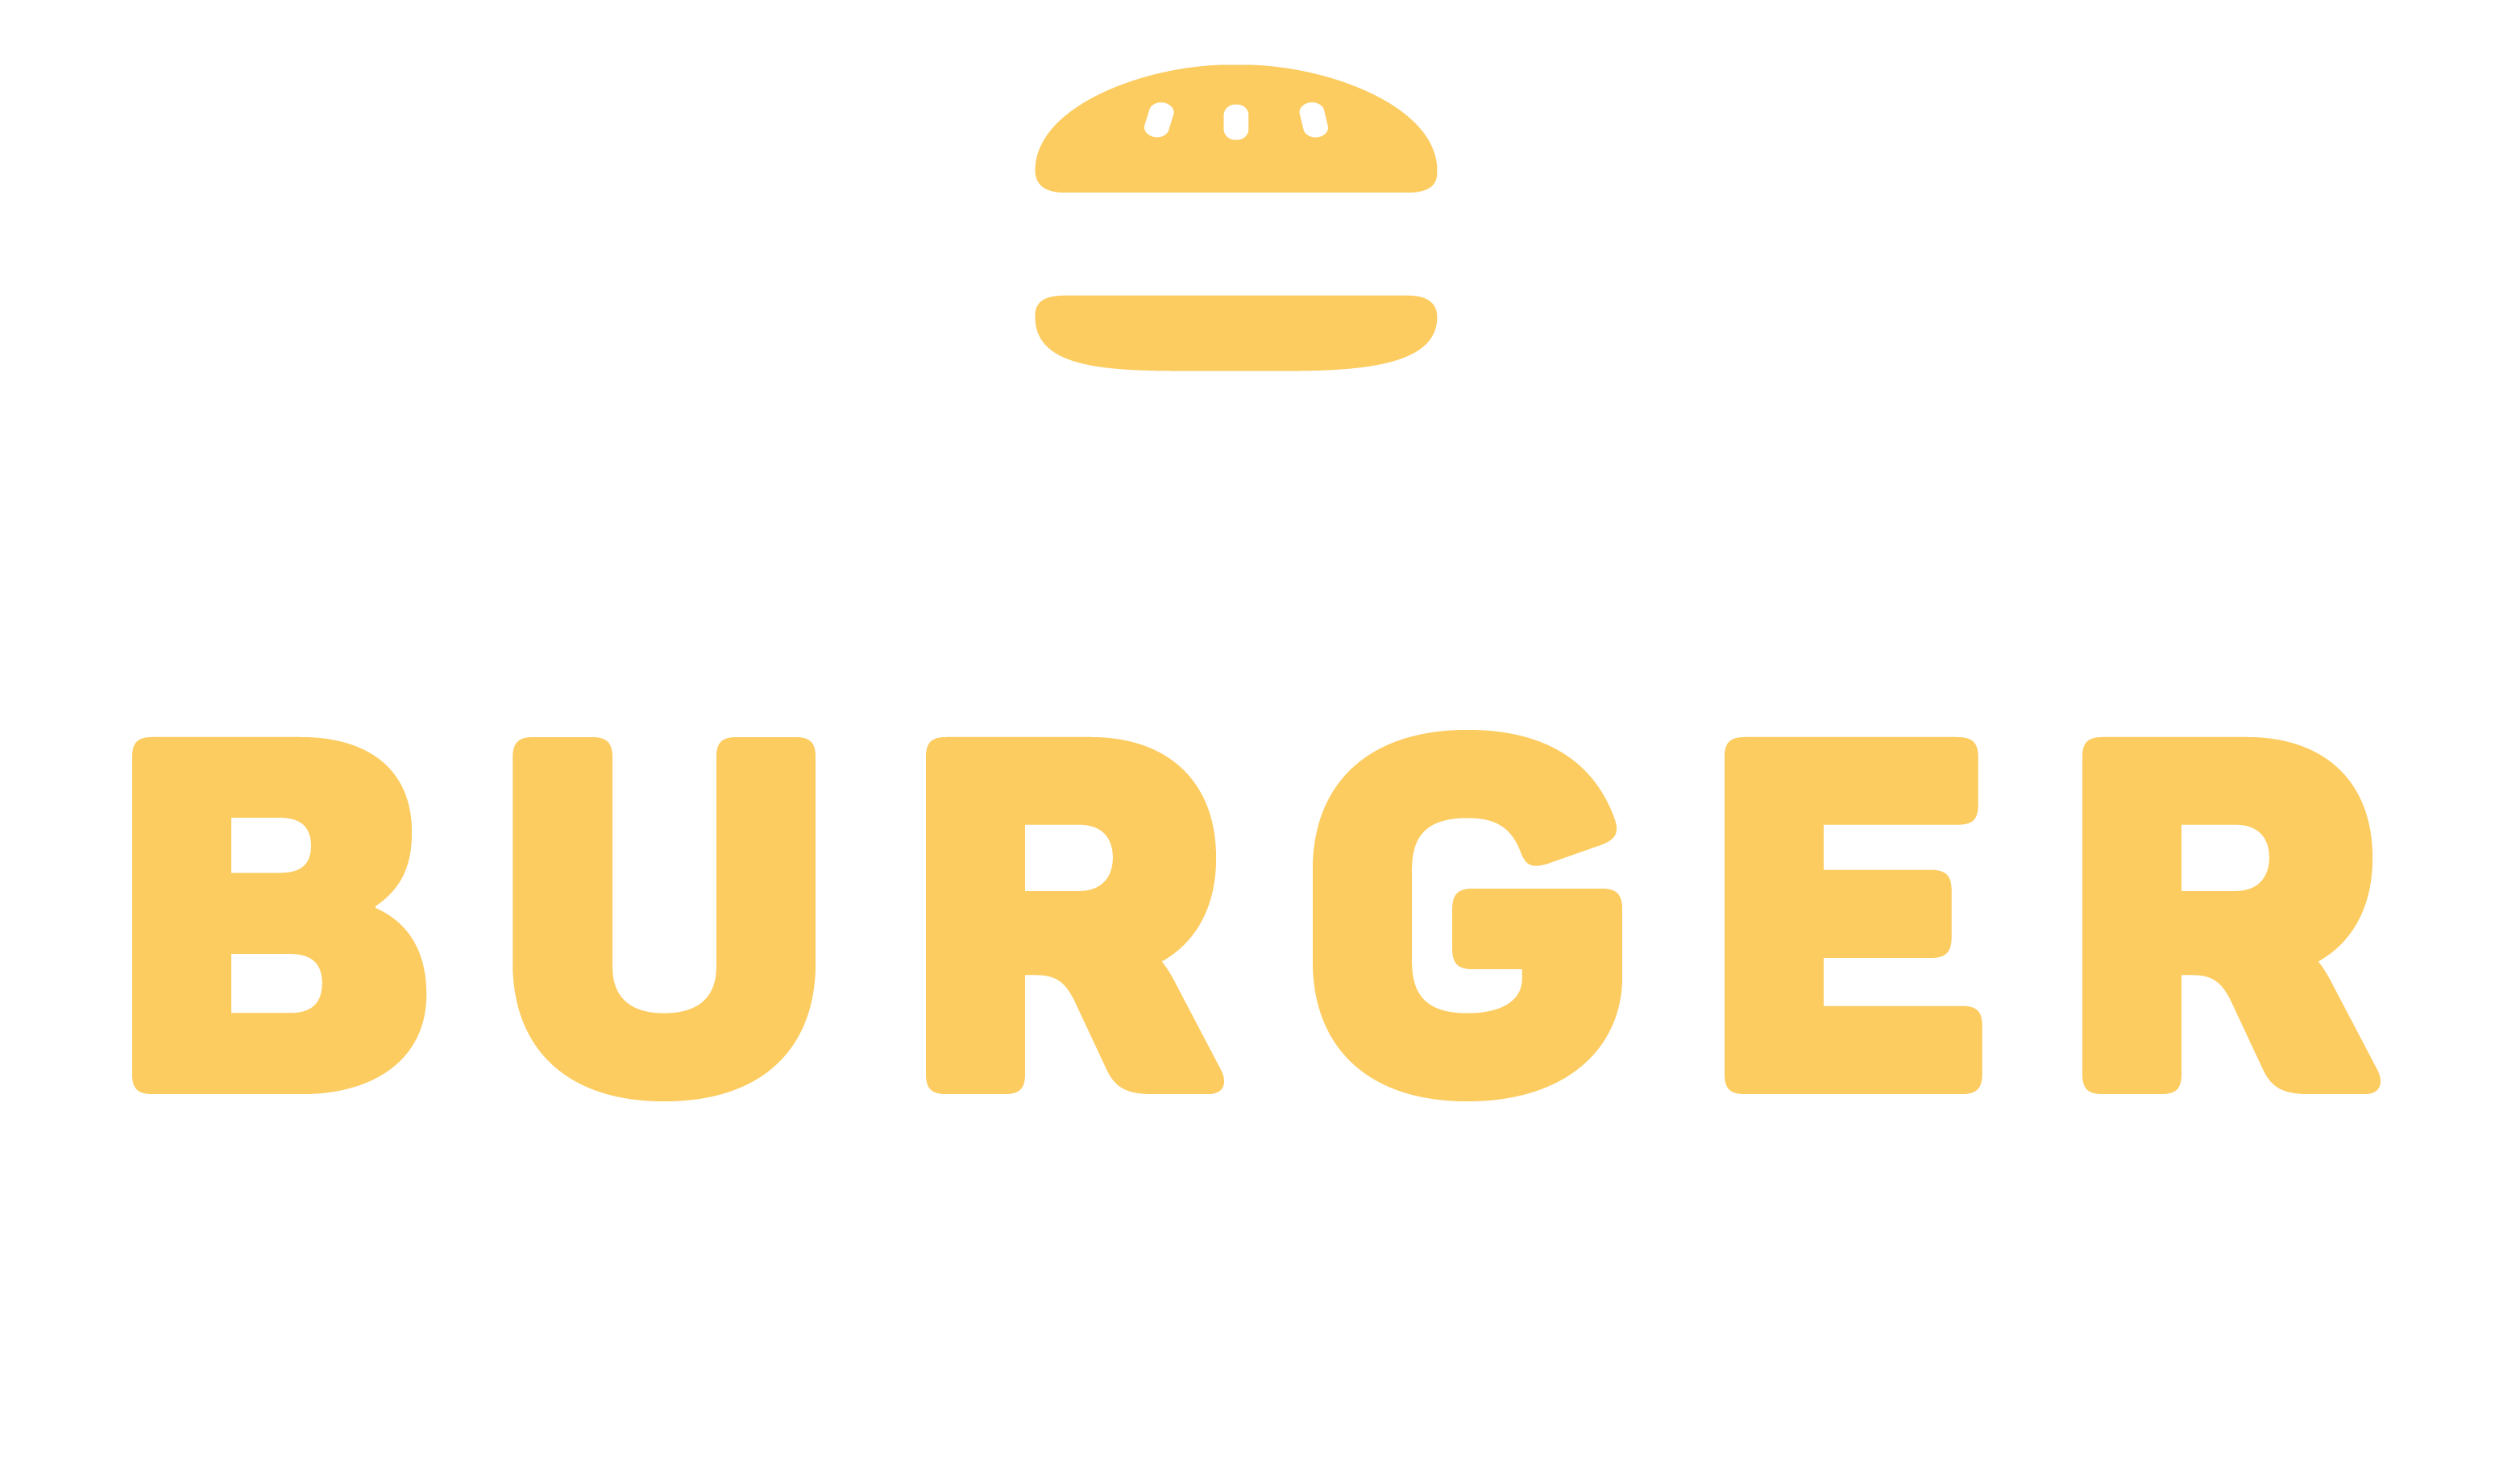 The Sunshine Burger Company